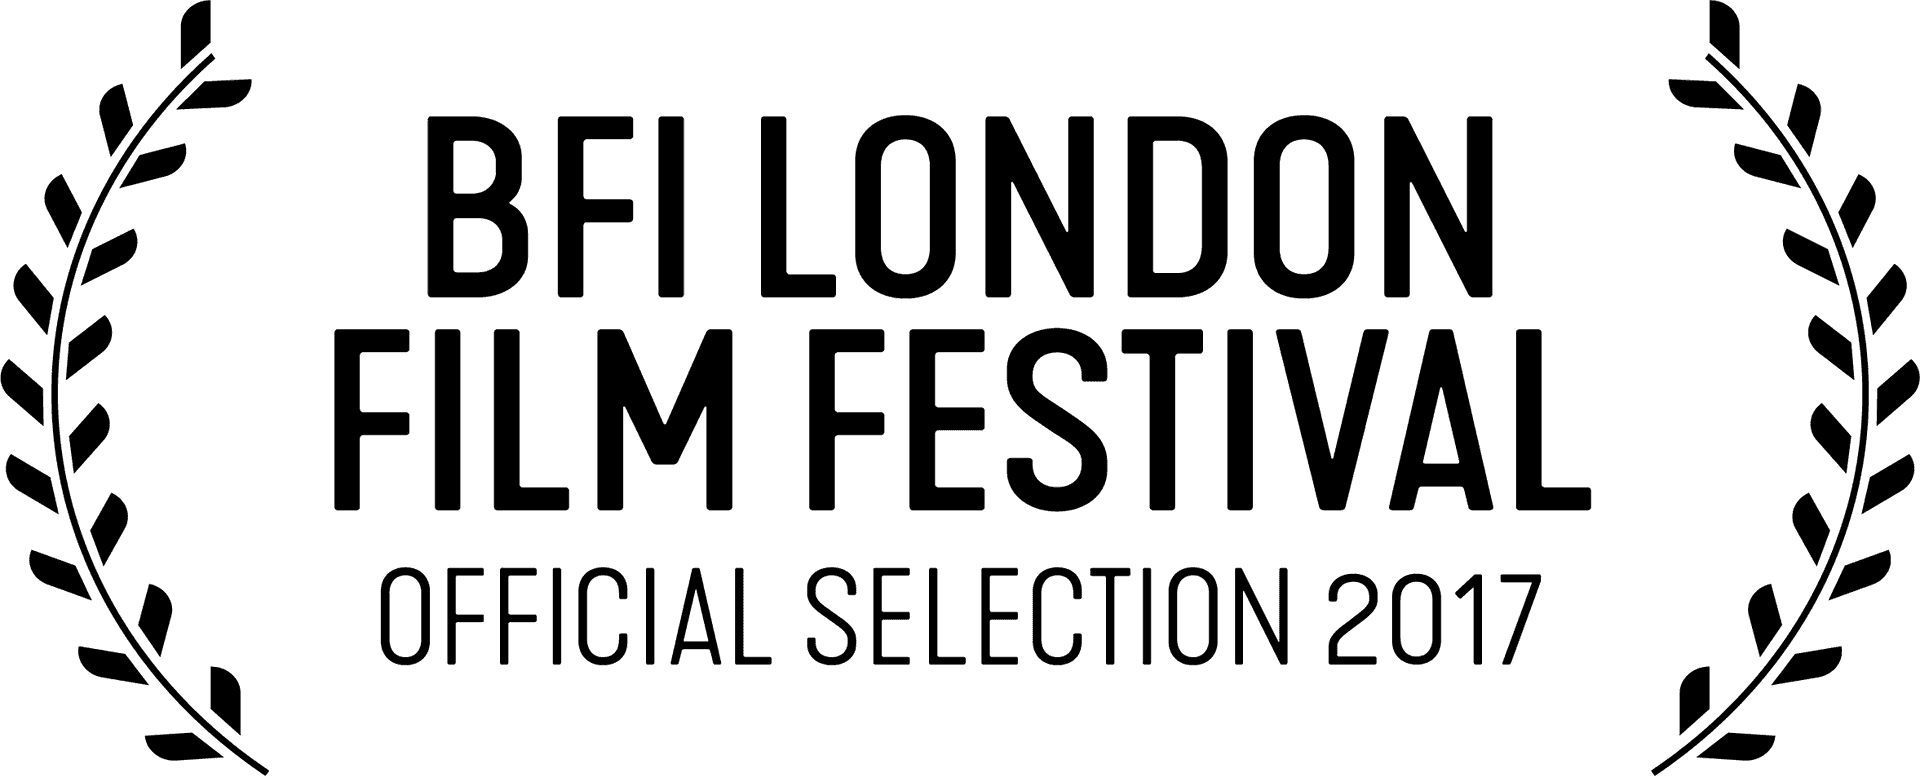 B F I London Film Festival Official Selection2017 Logo PNG